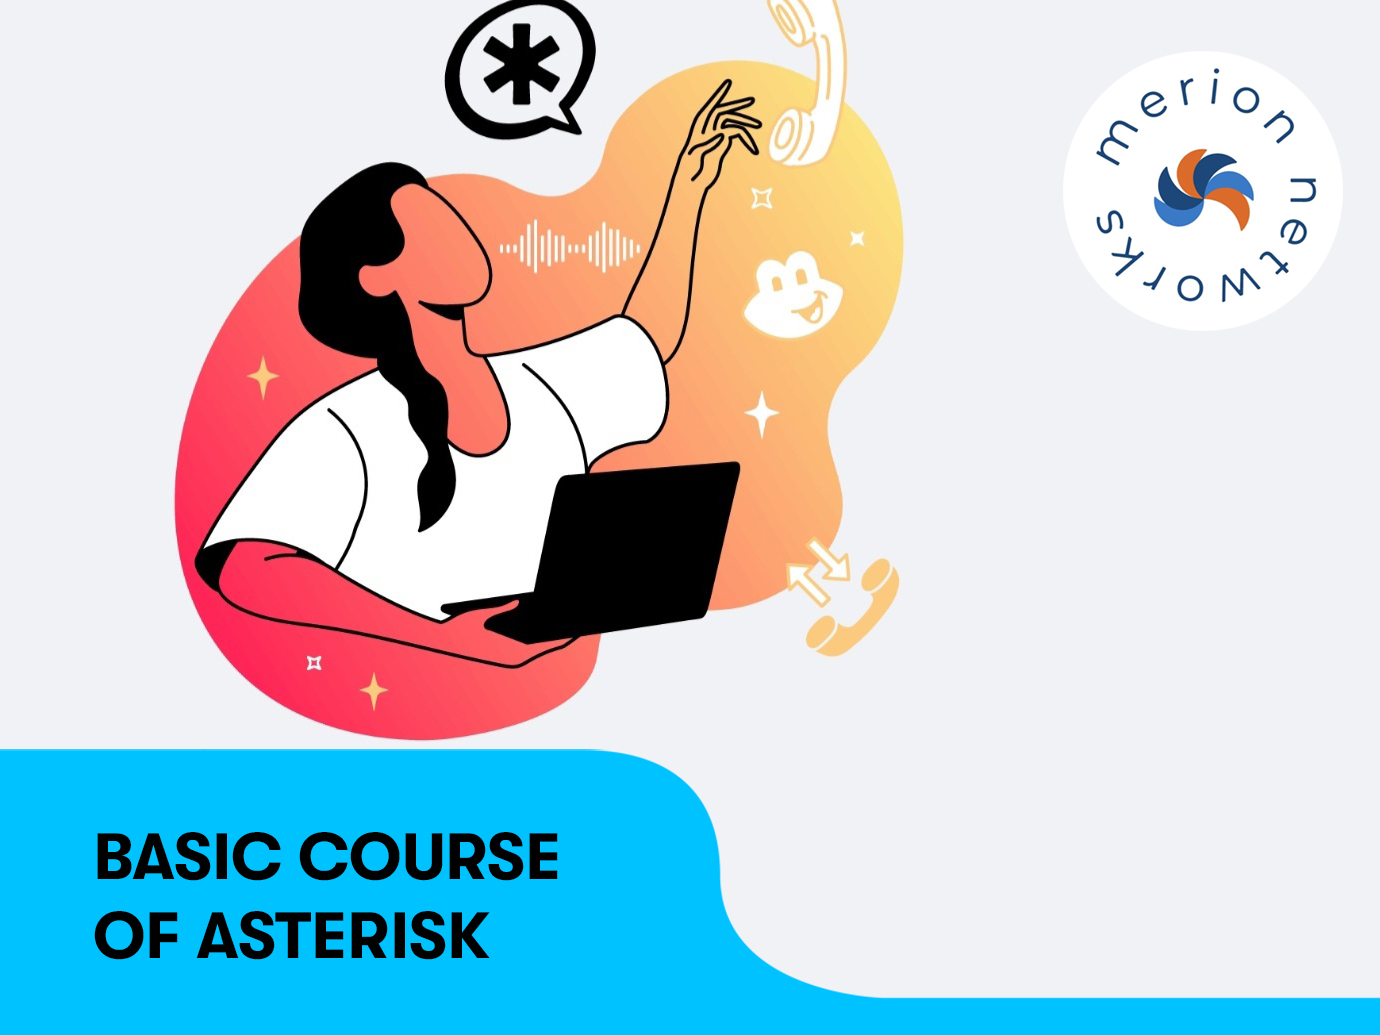 Basic course on Asterisk